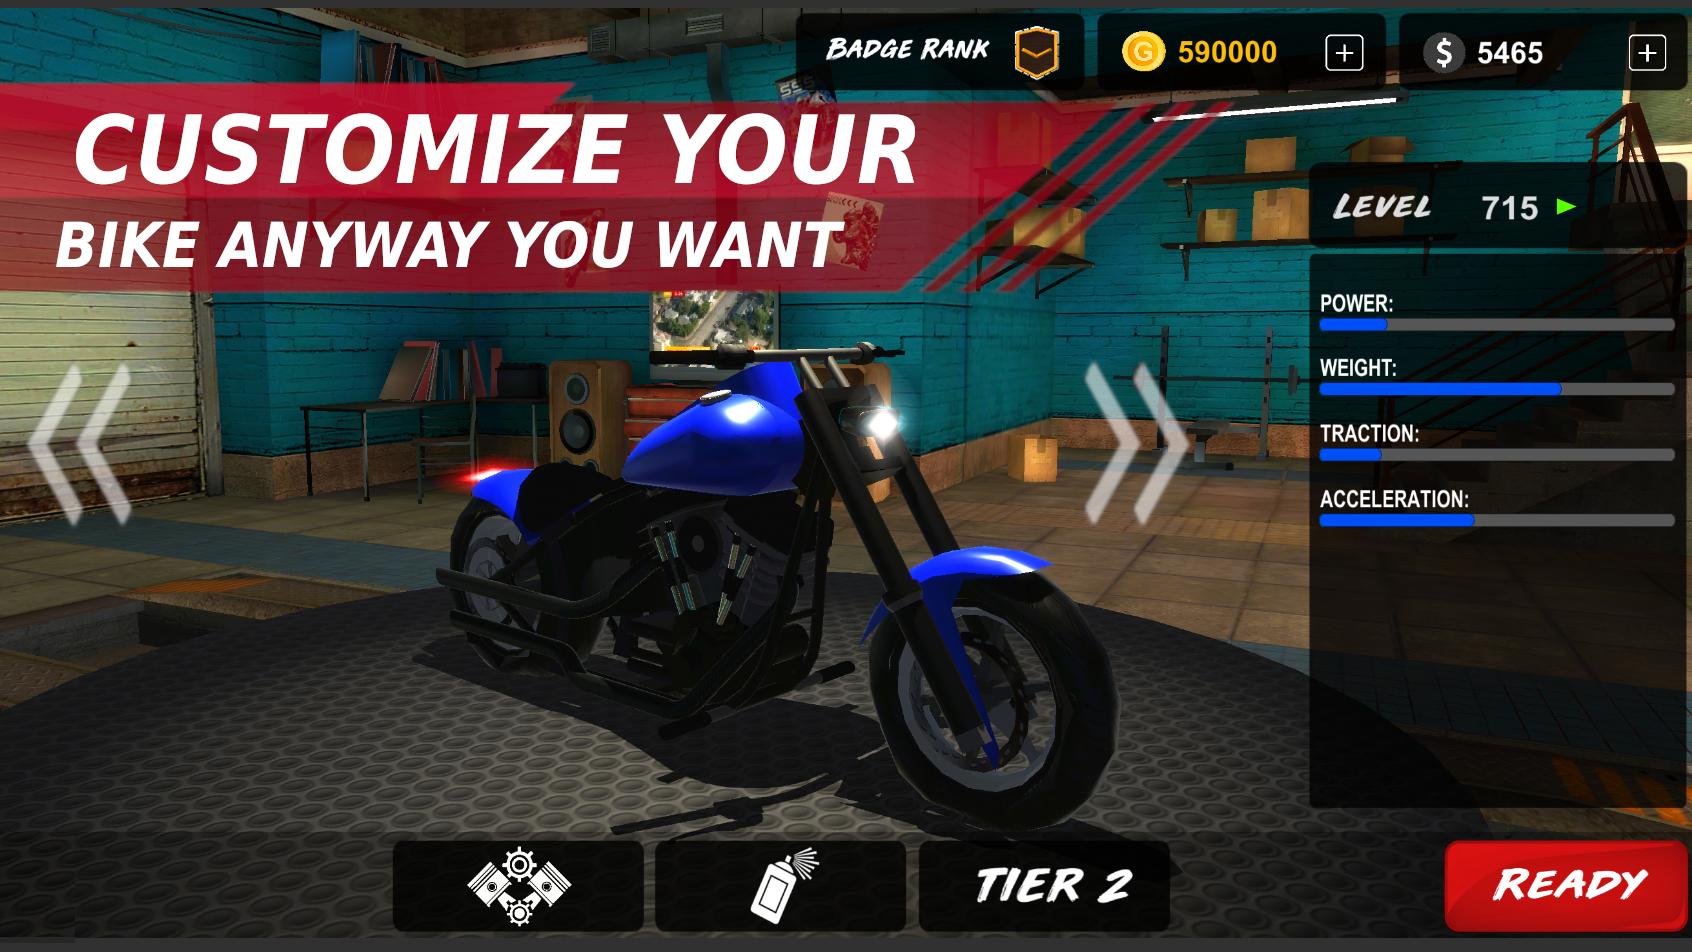 Rebel Gears Drag Bike Racing / CSR Race Moto Game 1.3.2 Screenshot 24